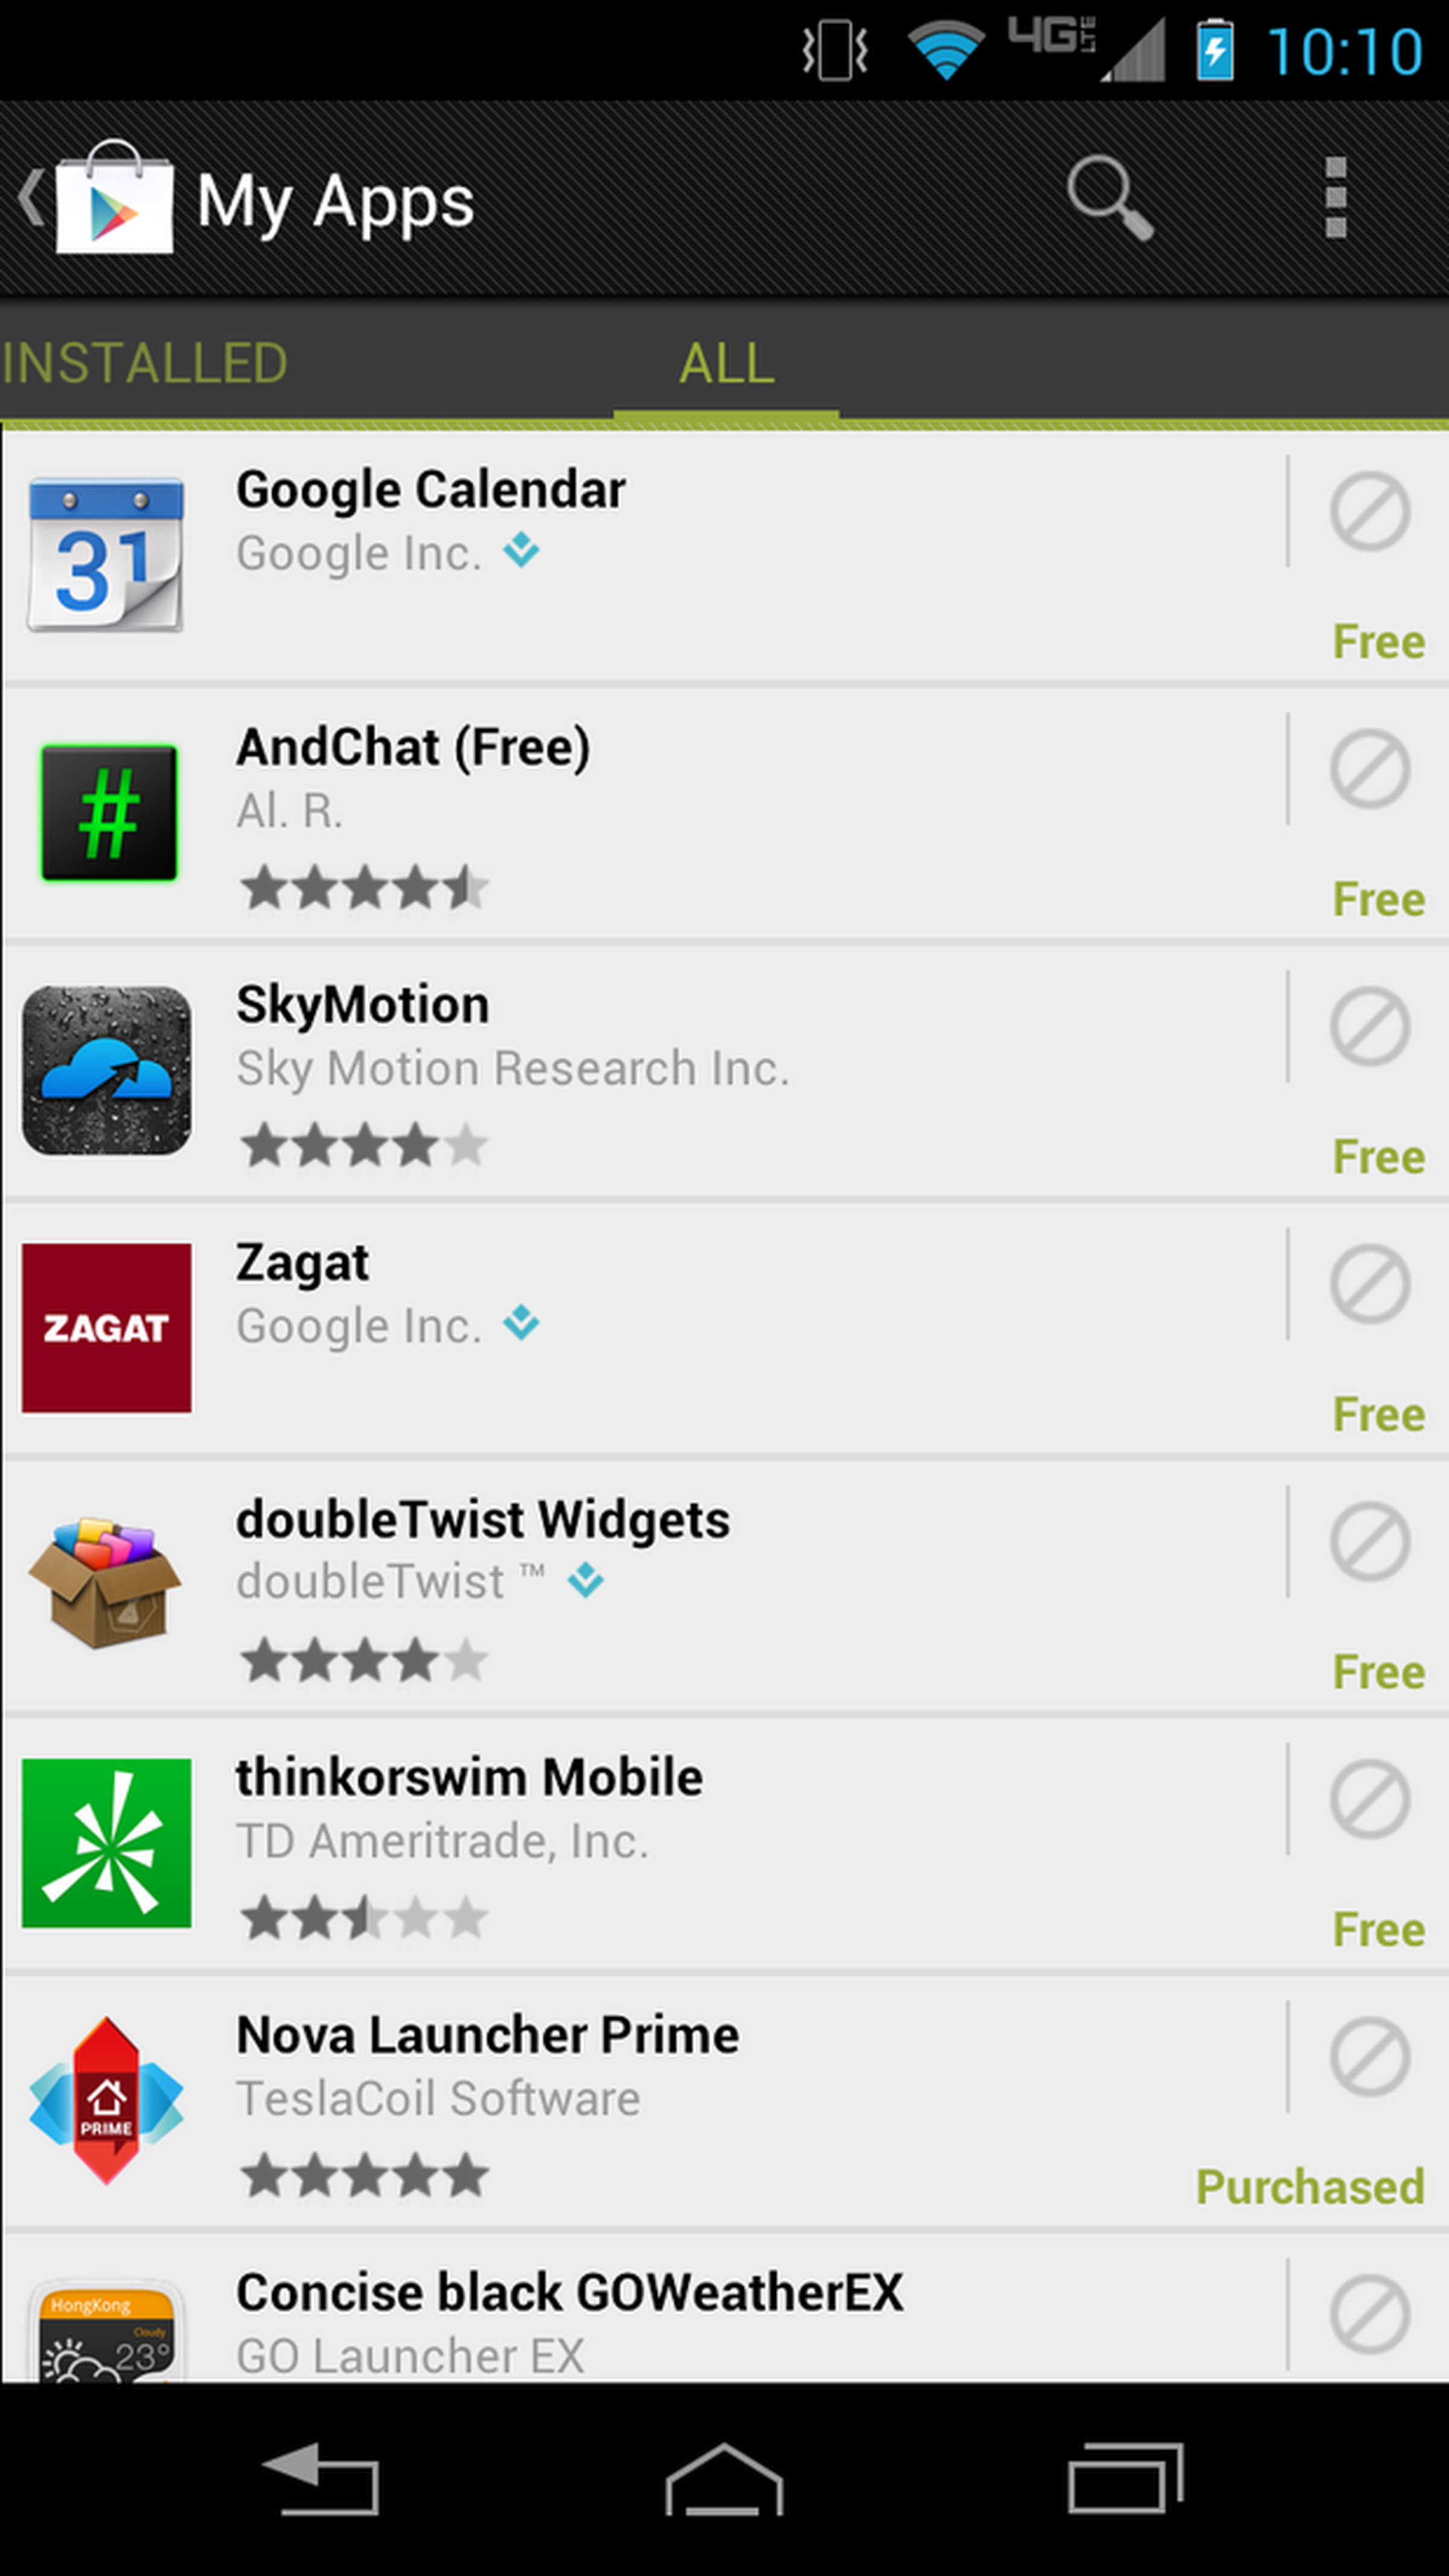 Google Play 3.9.16 screenshots